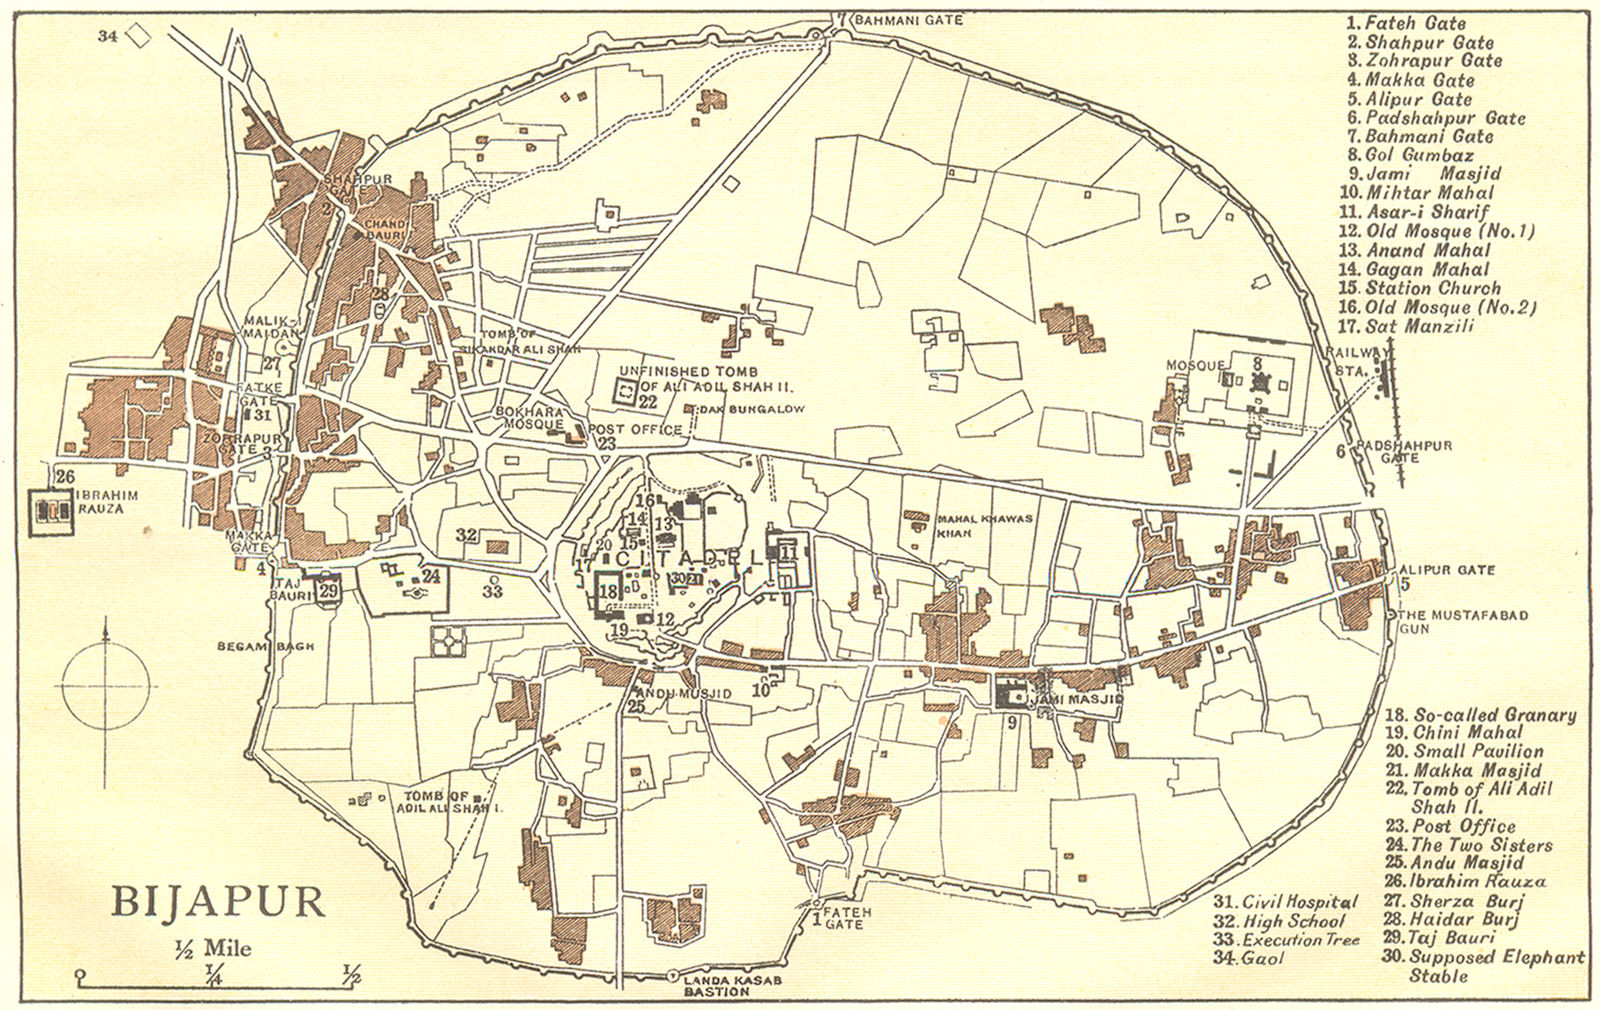 BRITISH INDIA. Bijapur city plan showing palaces/mahal mosques gates 1924 map